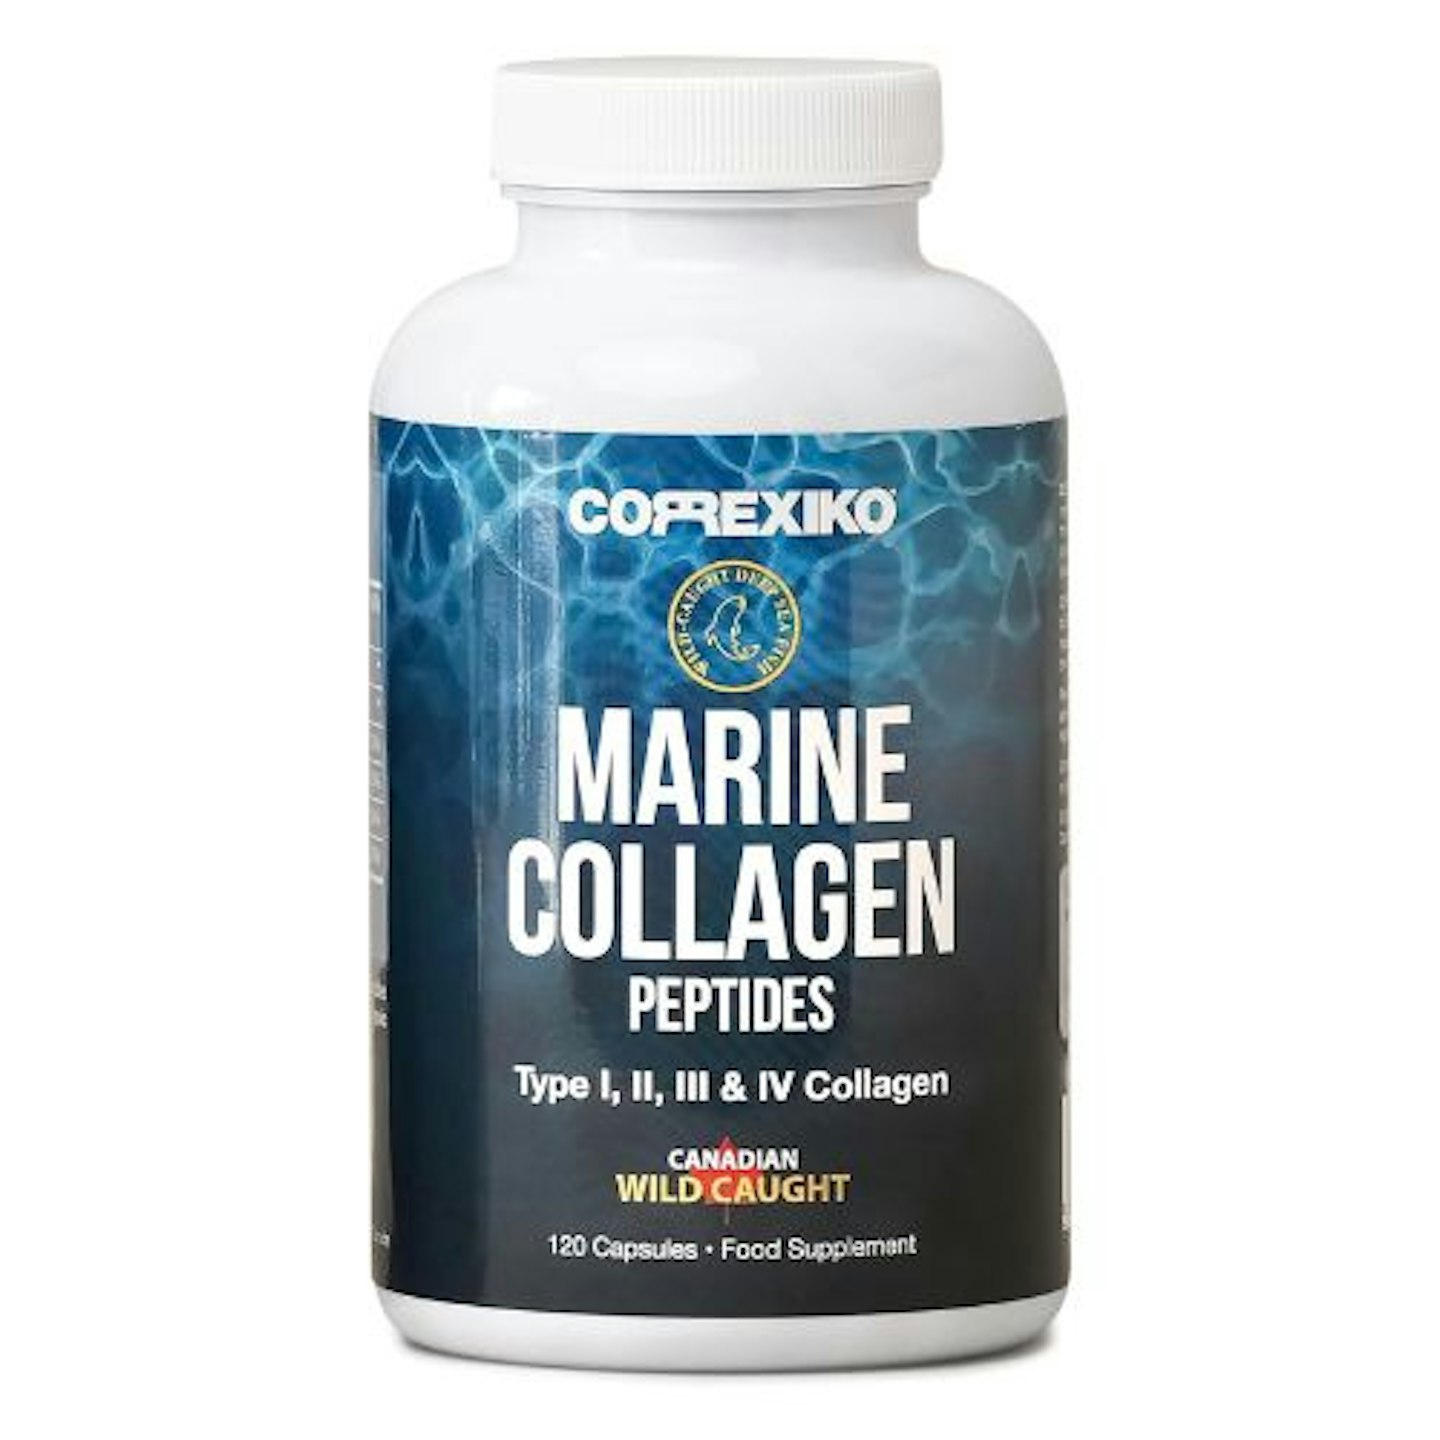 CORREXIKO Marine Collagen Pills